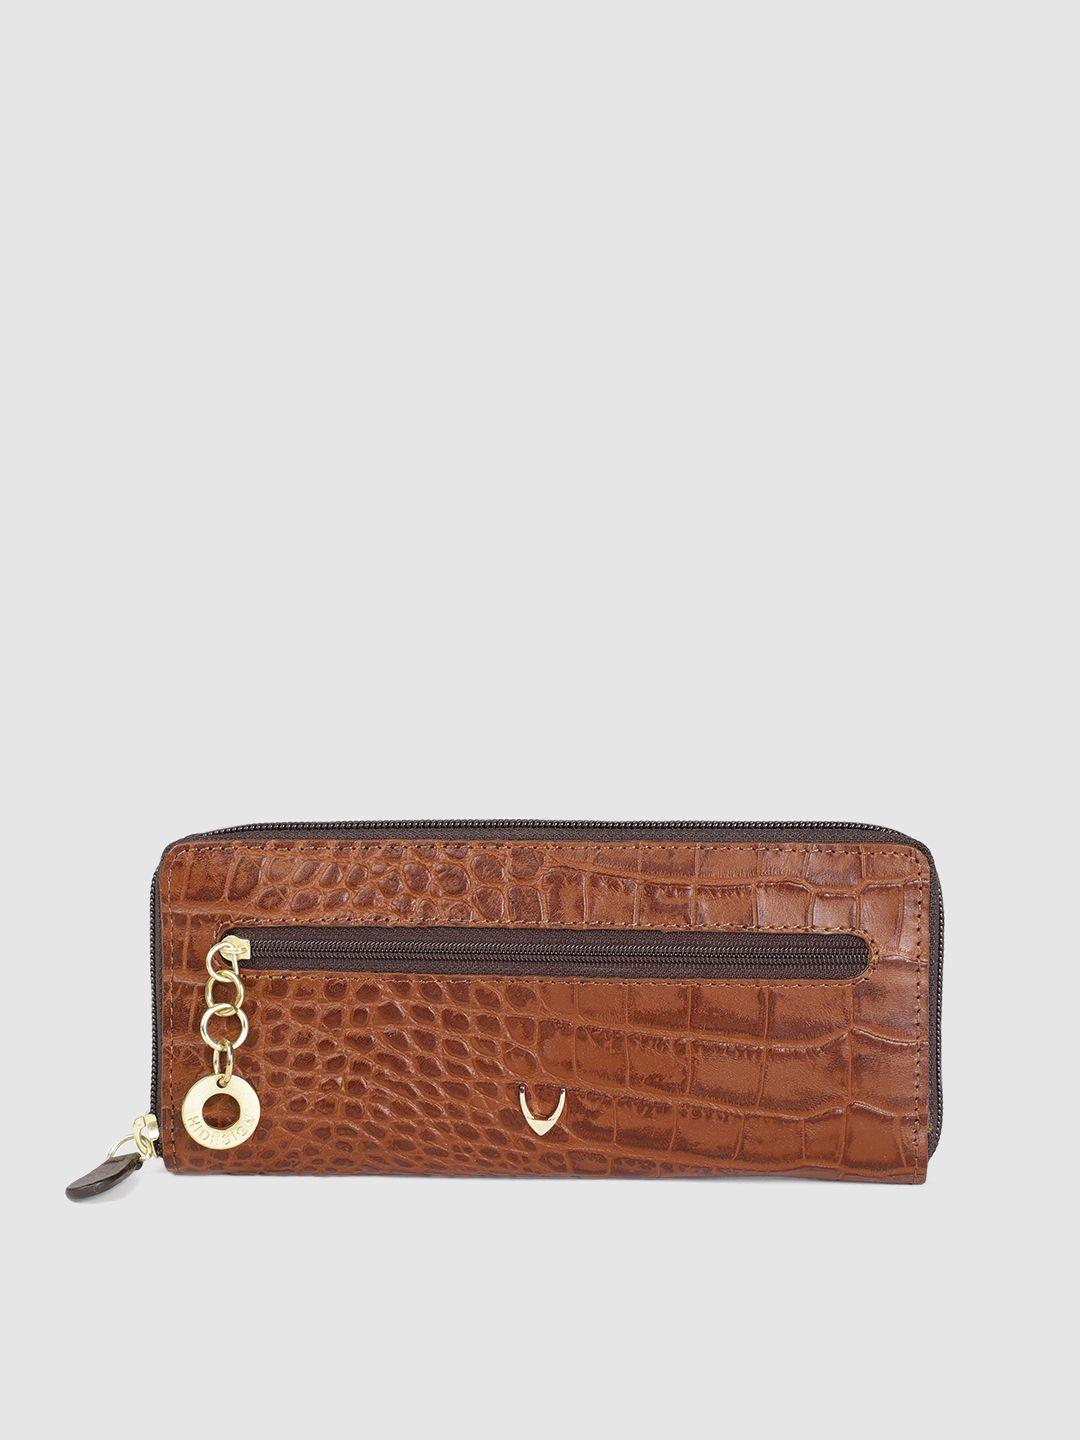 hidesign women tan brown textured leather zip around wallet